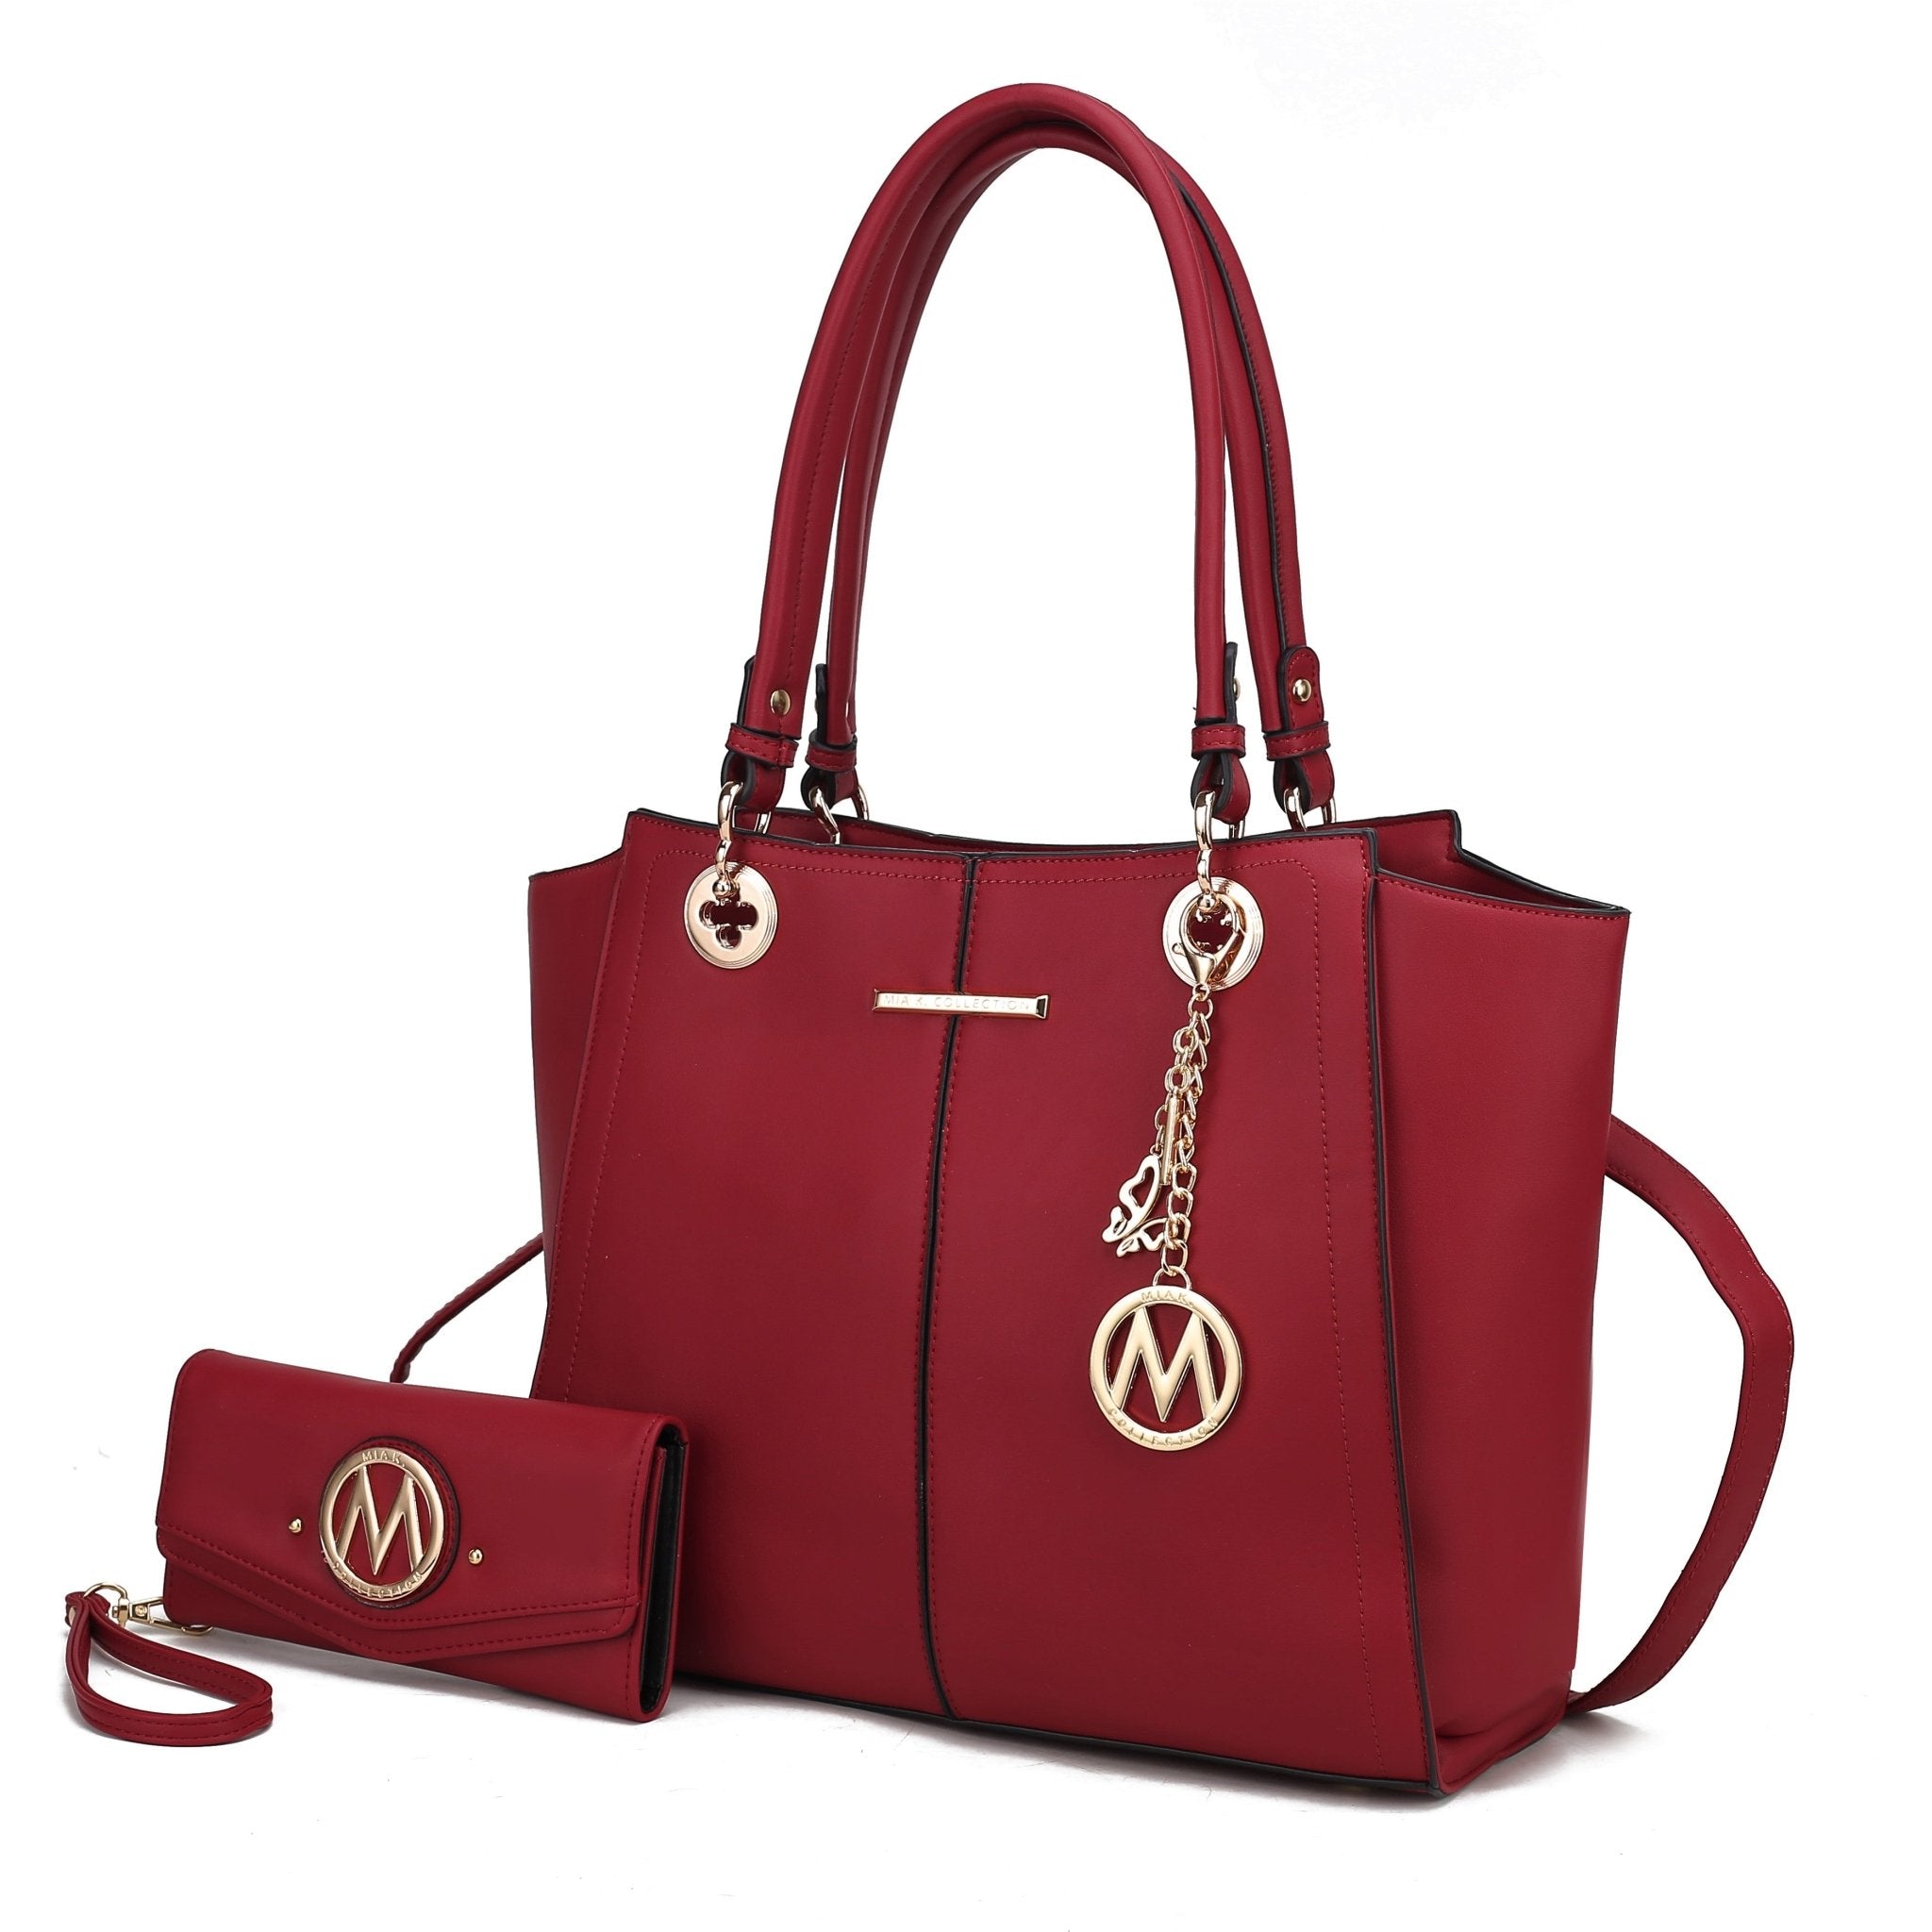 Ivy Vegan Leather Women’s Tote Handbag with wallet - TJ Outlet